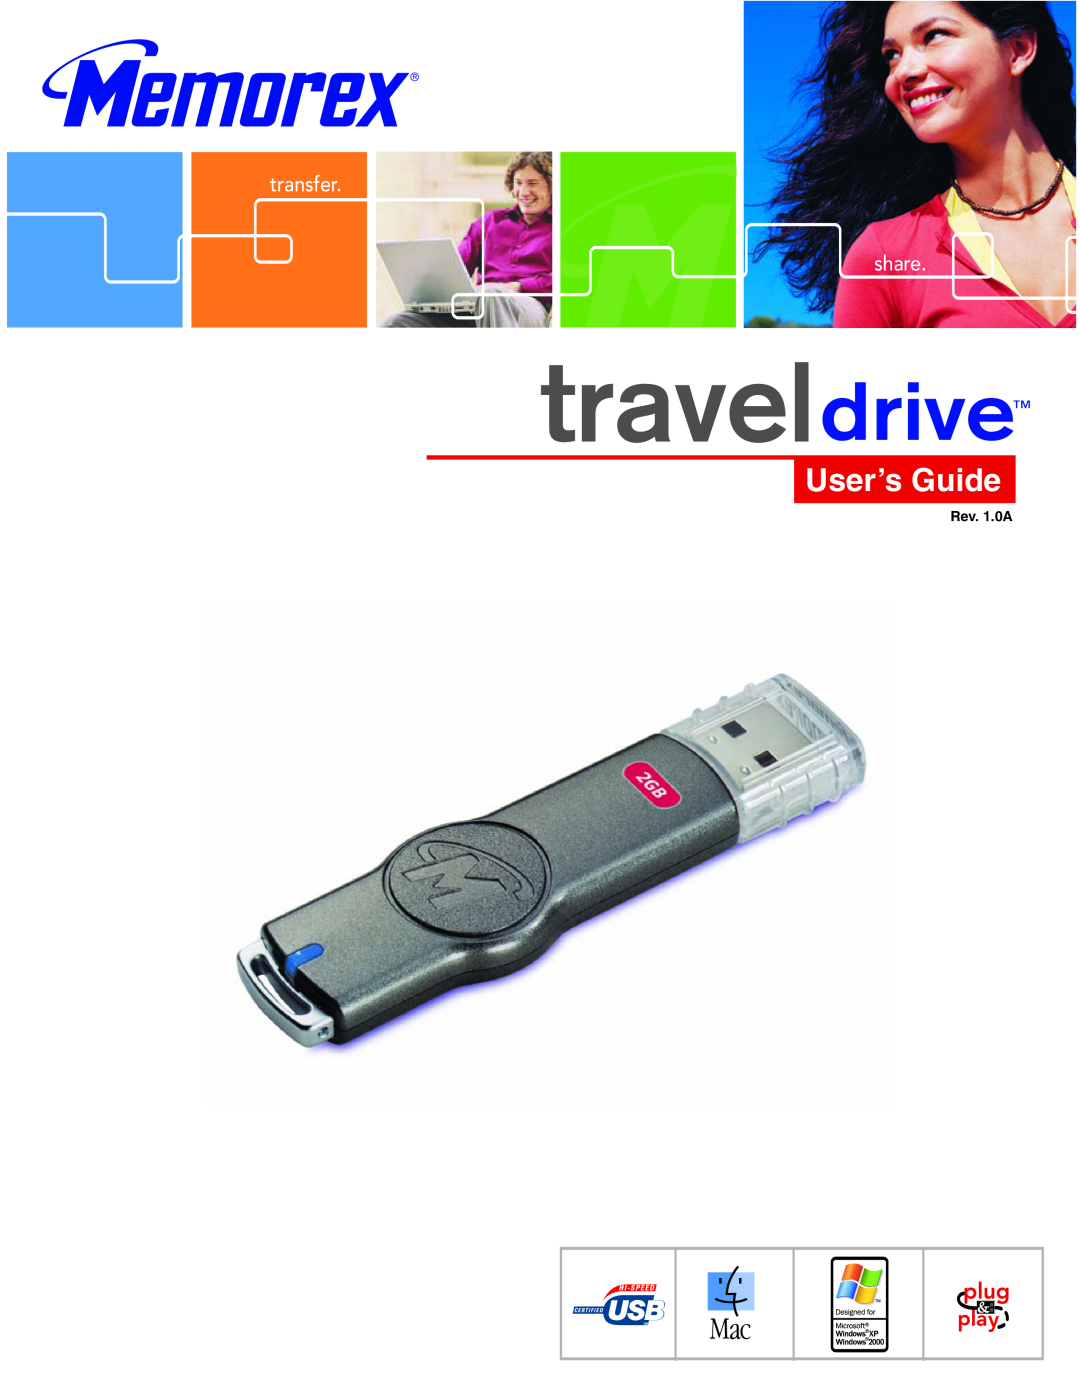 Memorex Travel Drive manual traveldrive, User’s Guide, transfer share, Rev. 1.0A 